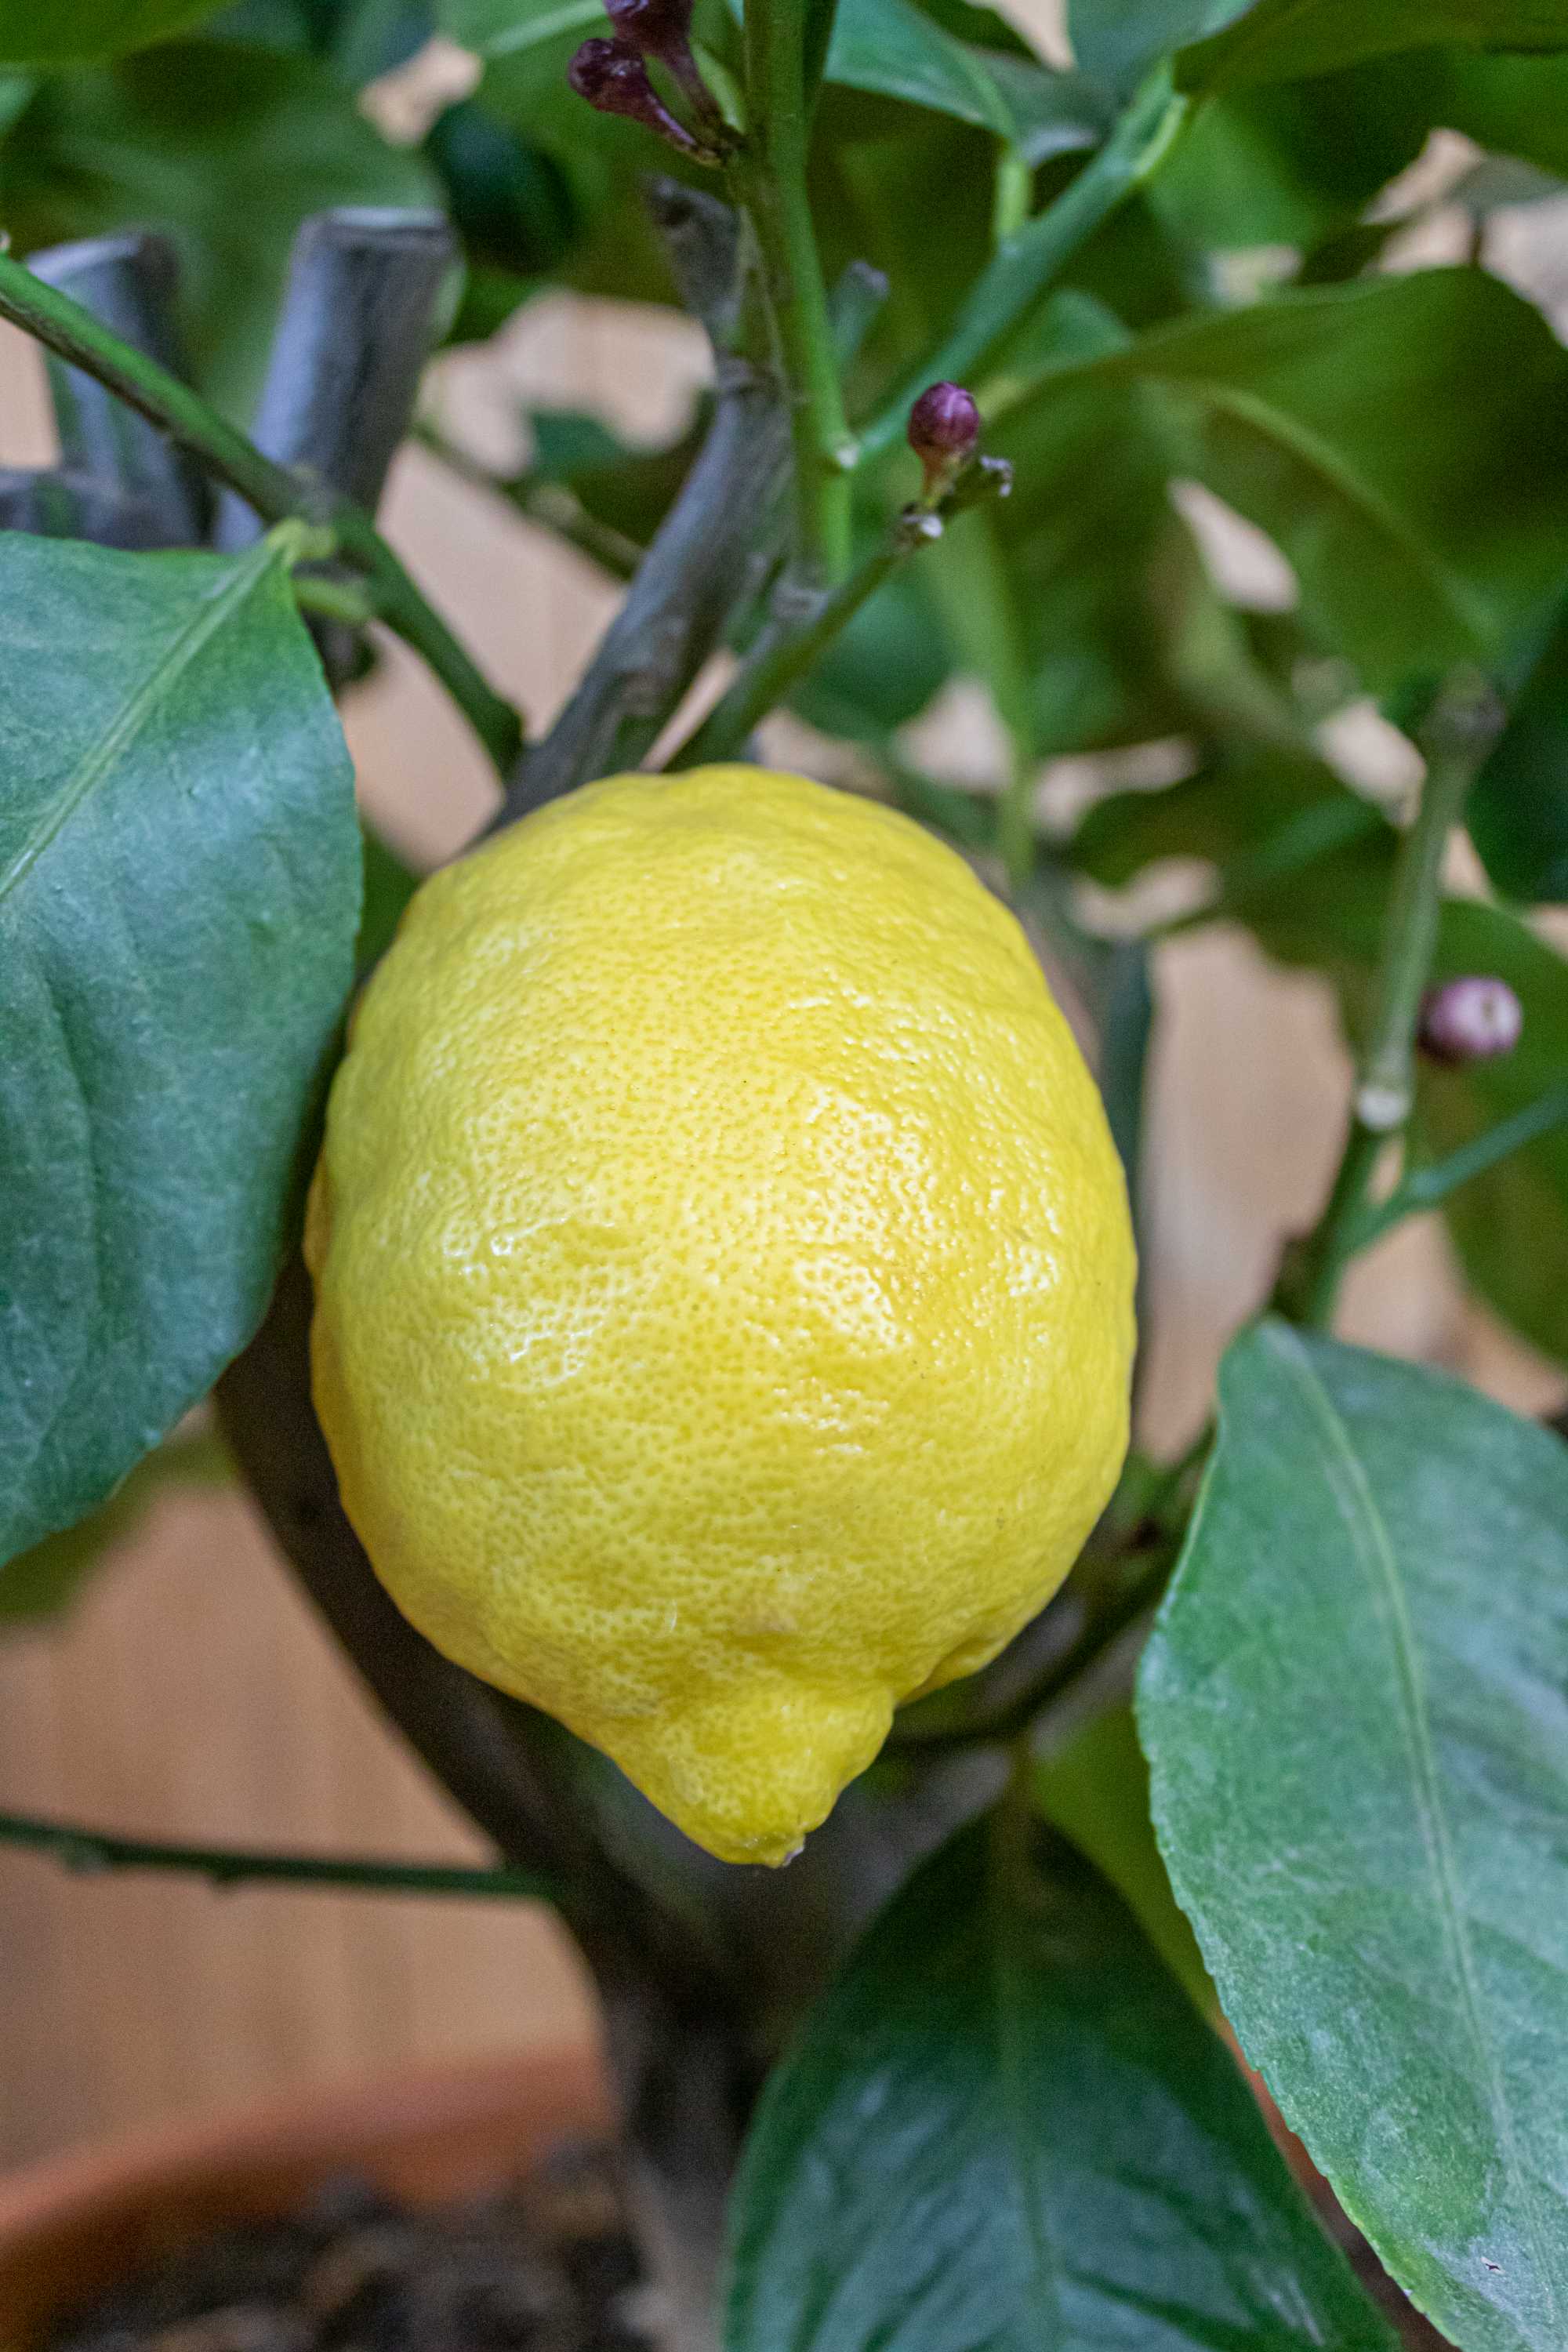 Zitronenbaum Halbstamm - Citrus Limon - echte Zitrone